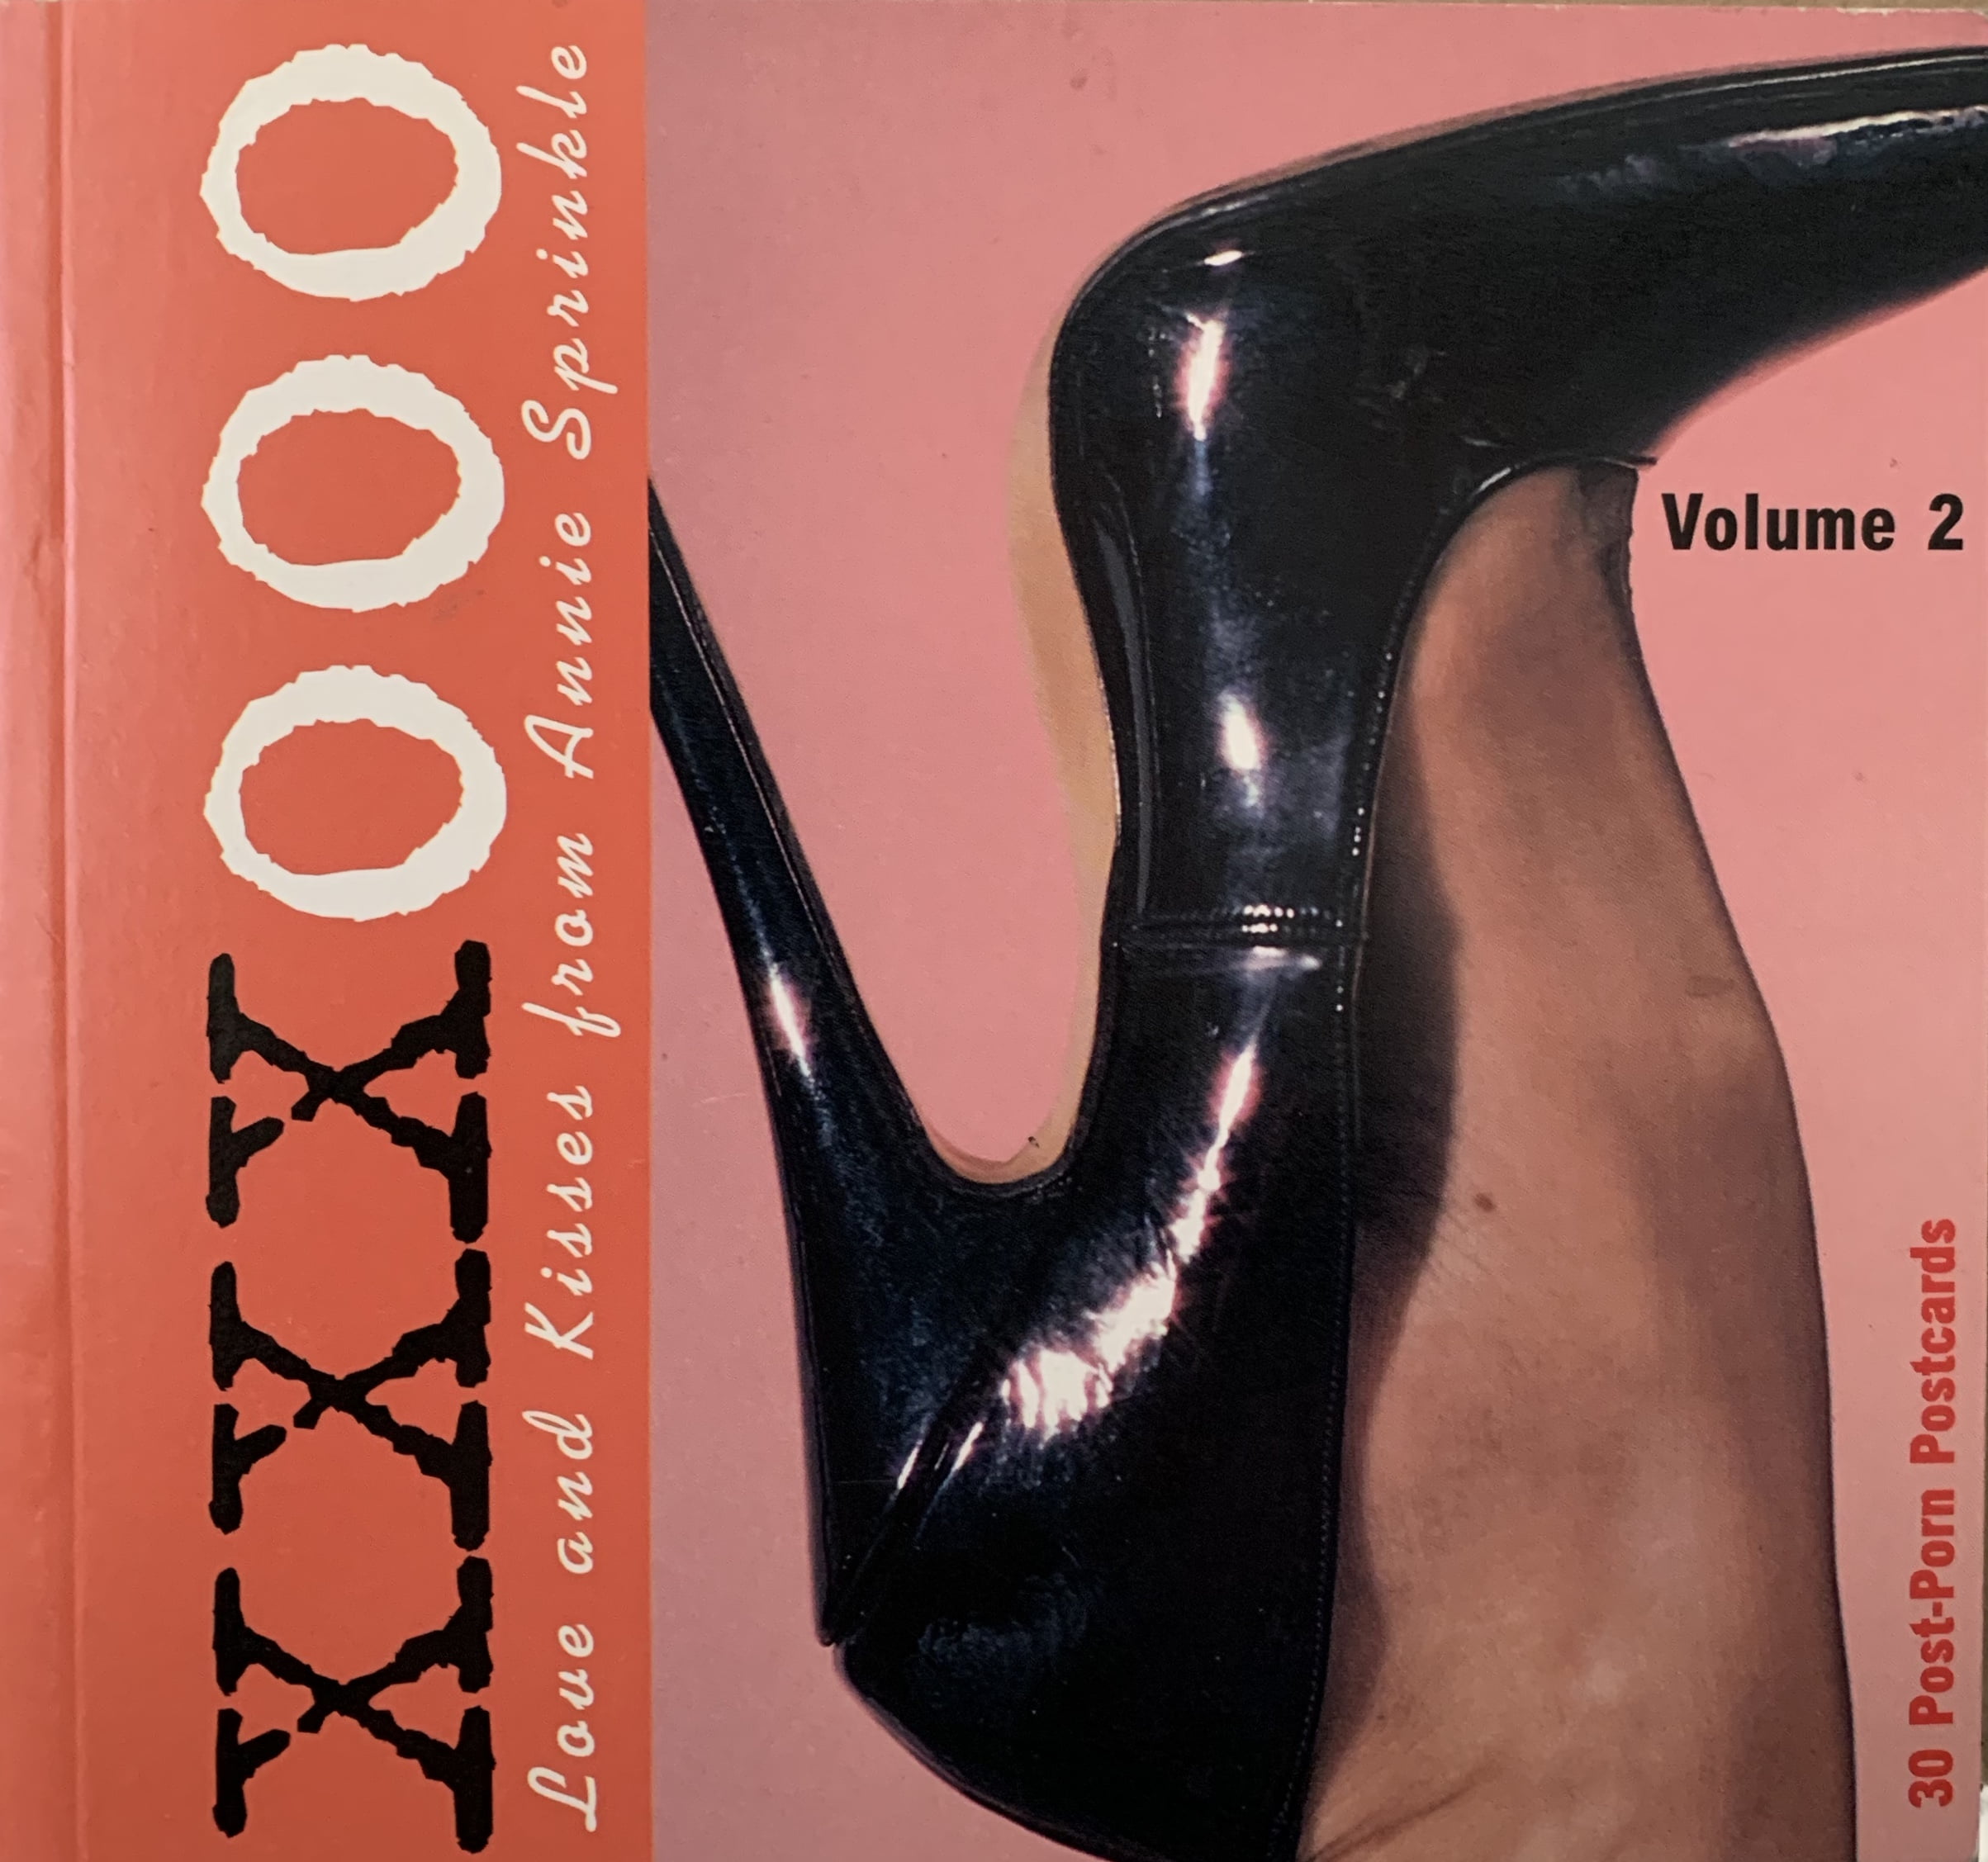 Www Xxx Ooo - XXX OOO LOVE & KISSES FROM ANNIE SPRINKLE VOL 2. 1997. - Unoriginal Sins